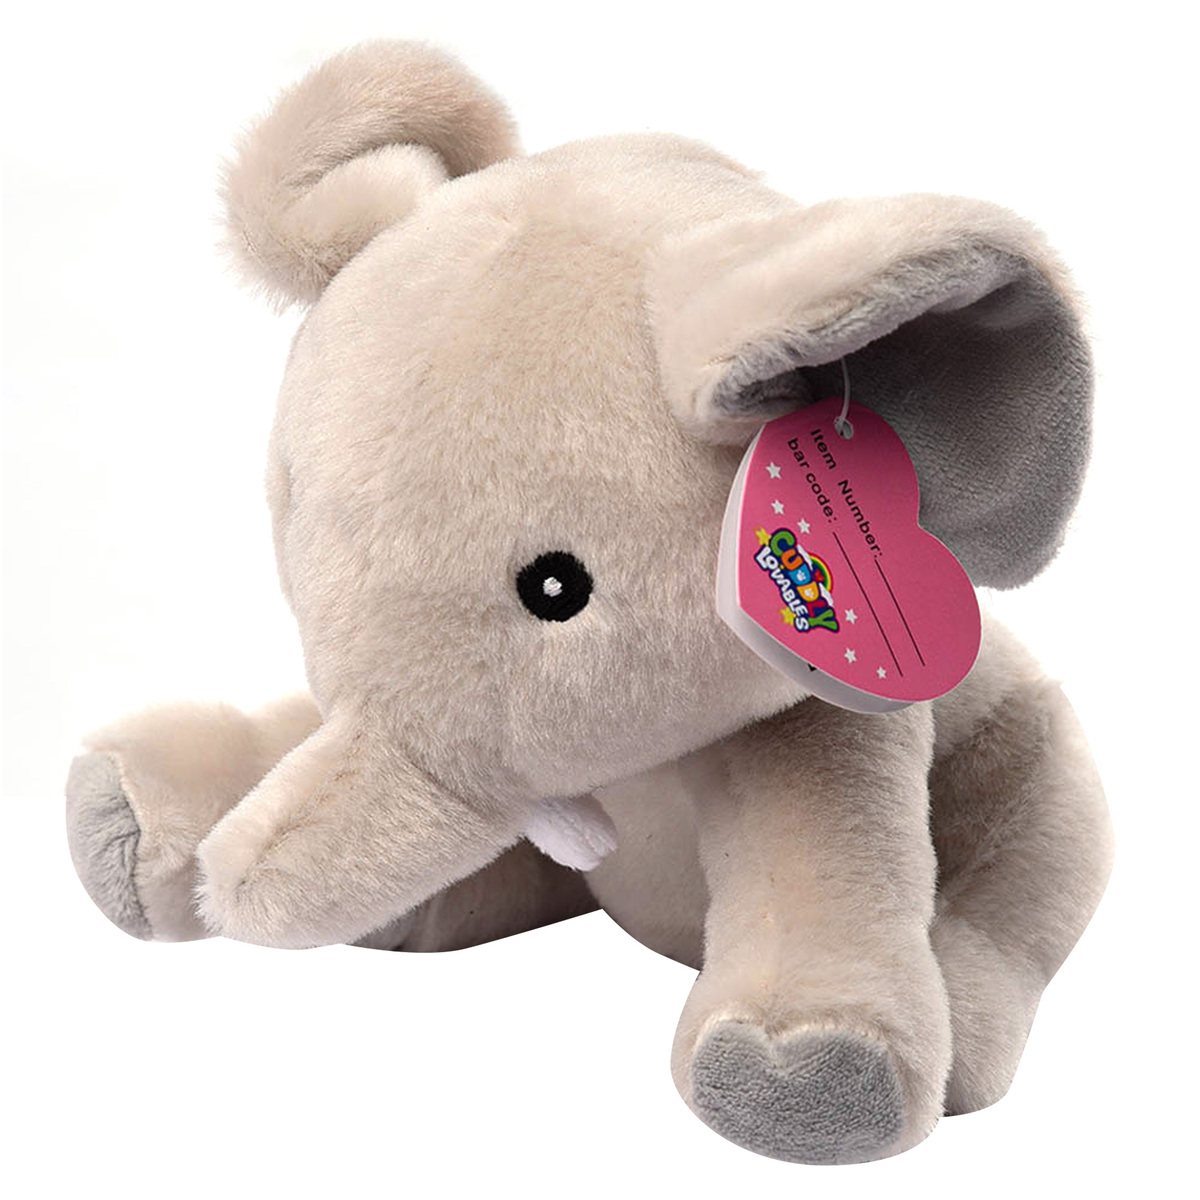 Cuddly Lovables Safari Elephant Plush Toy, CL30